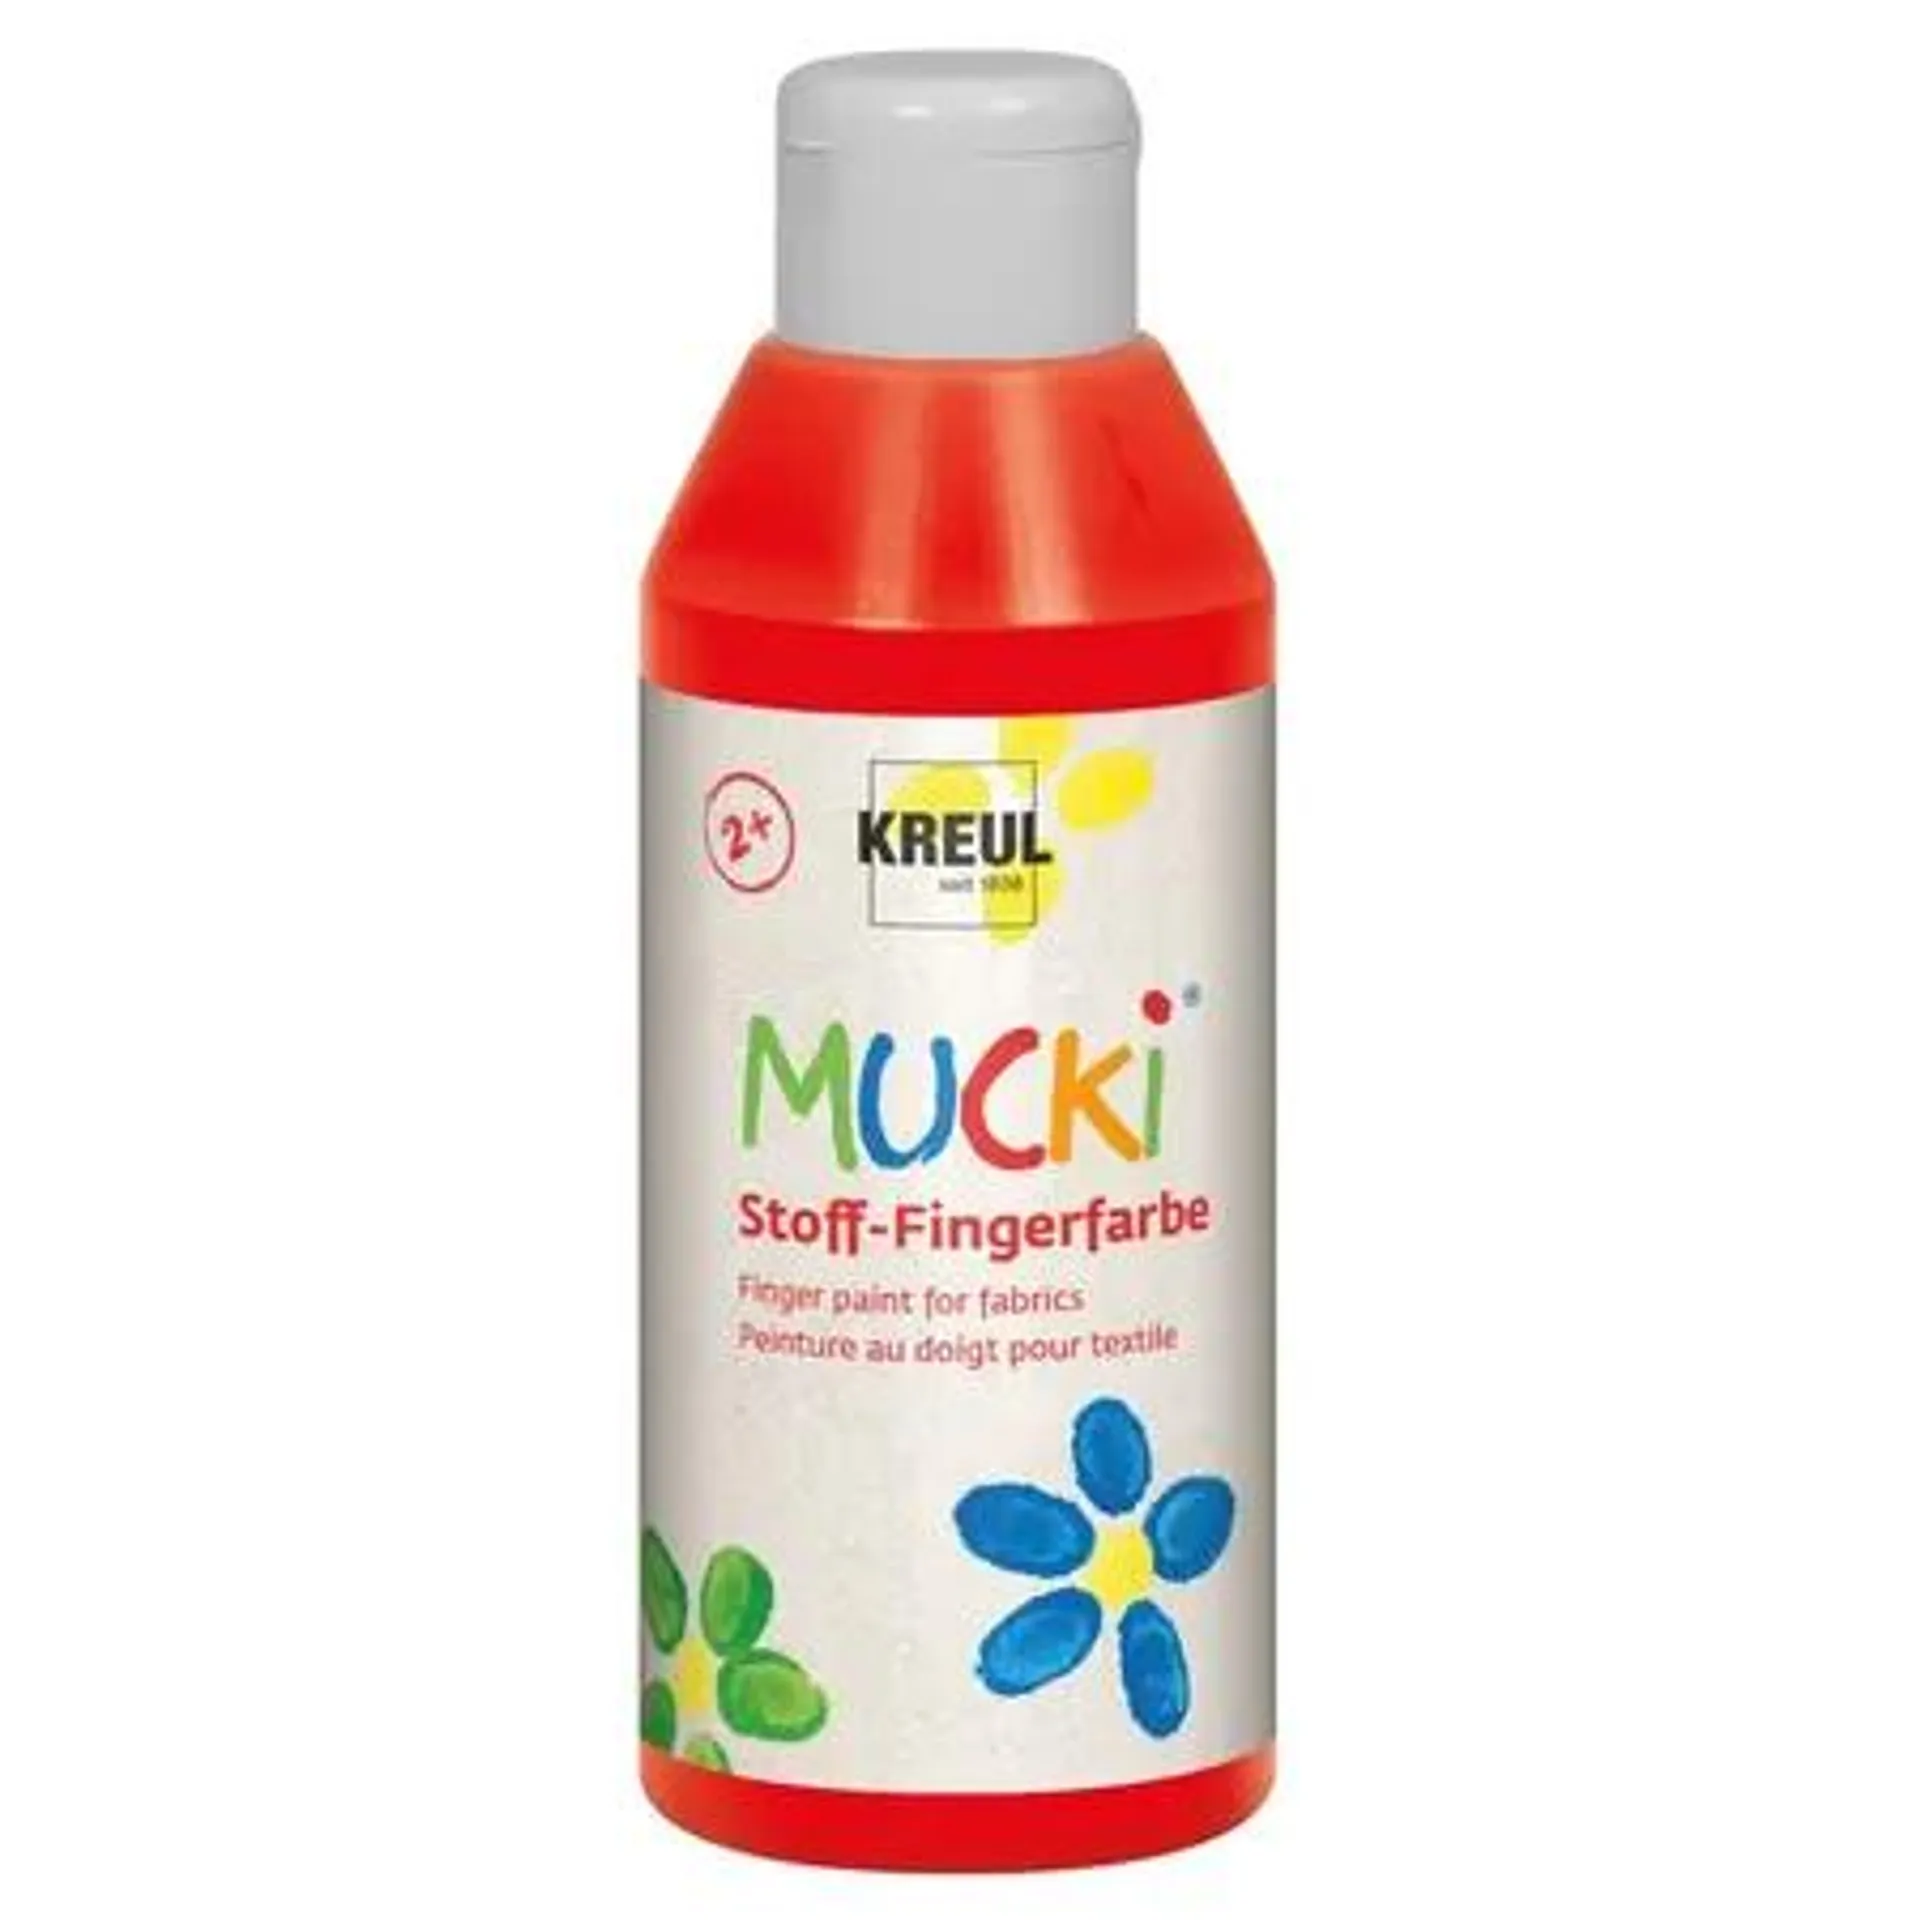 MUCKI Stoff-Fingerfarbe Rot 250 ml